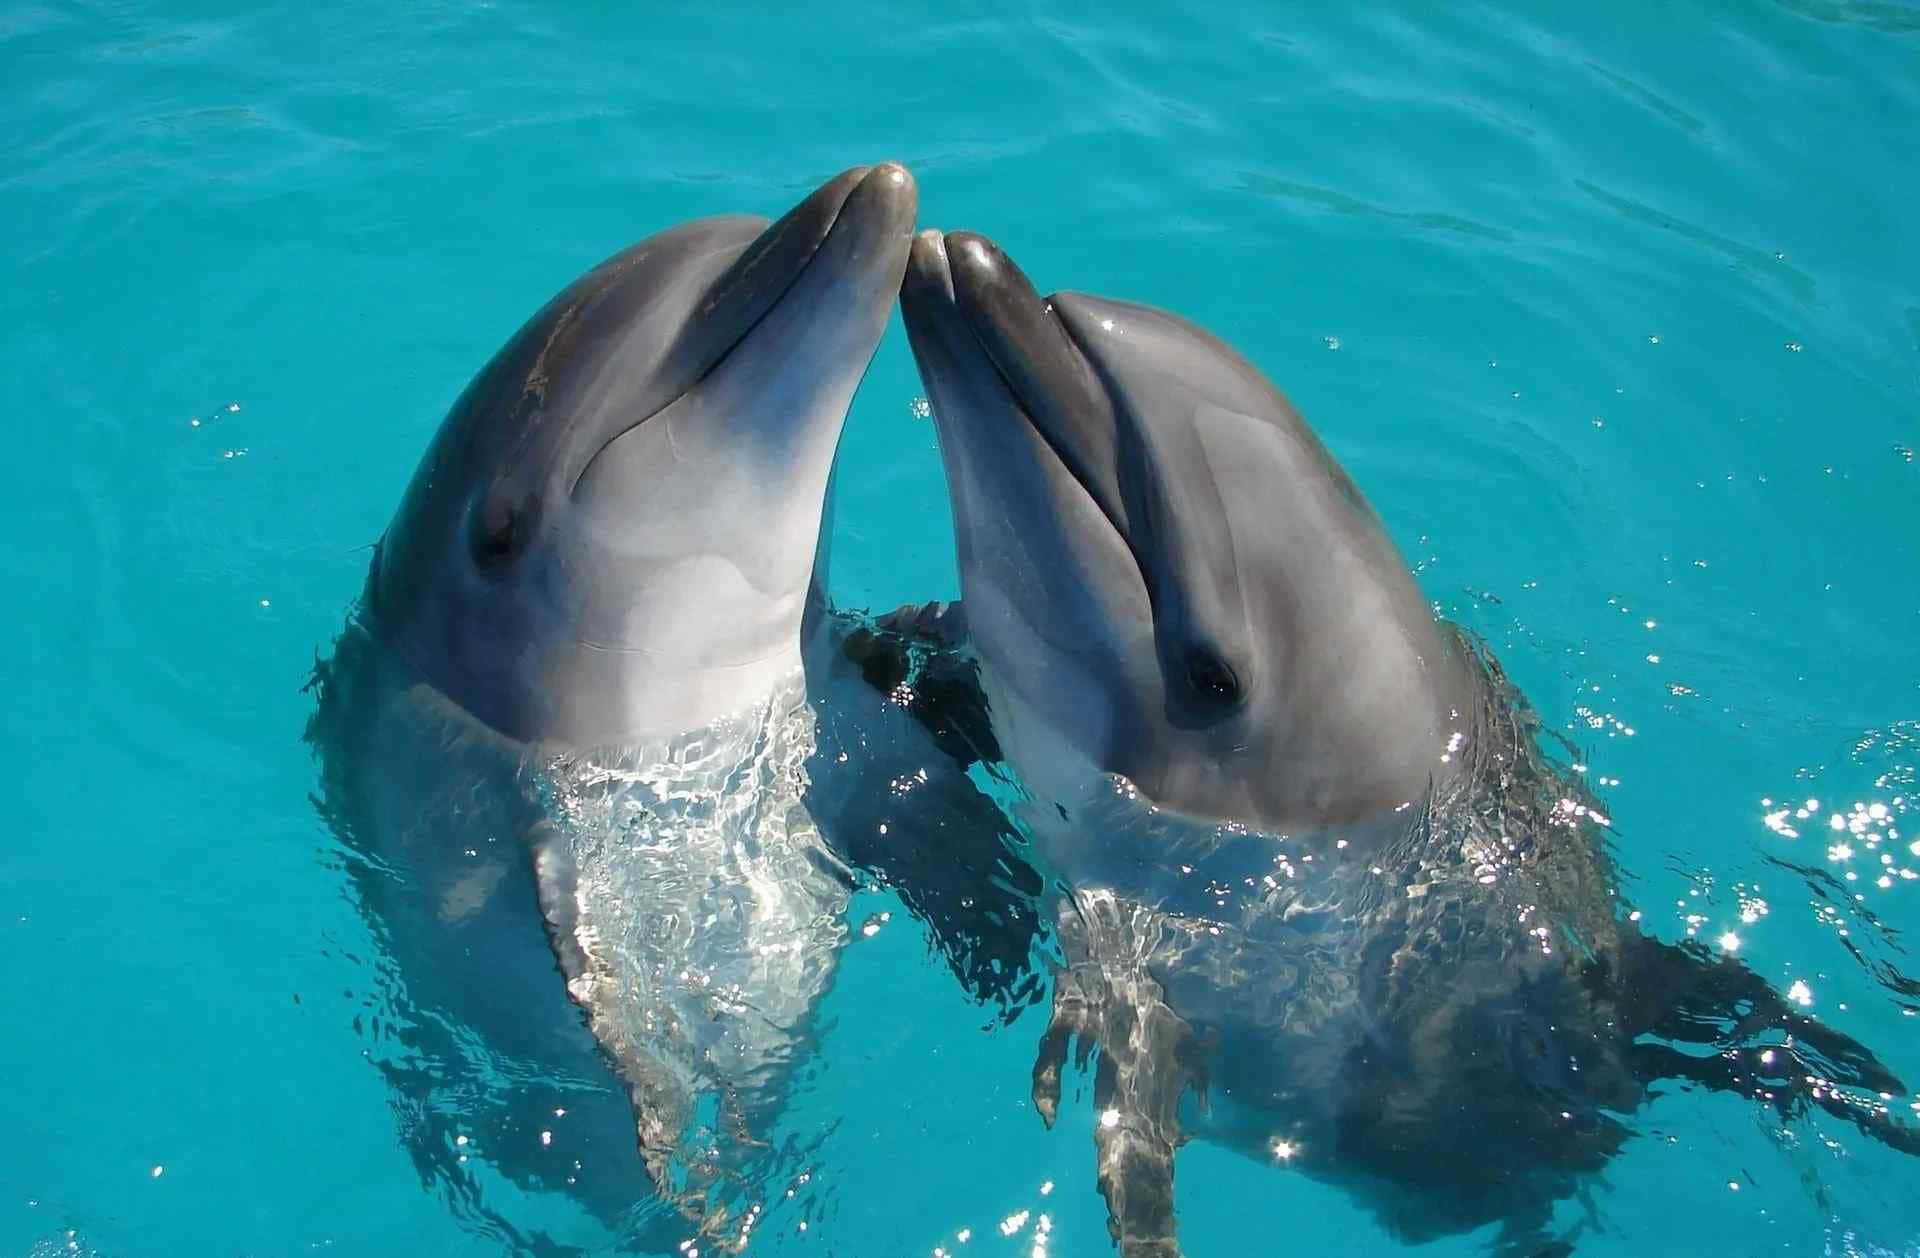 Imagende Una Linda Pareja De Delfines En El Agua